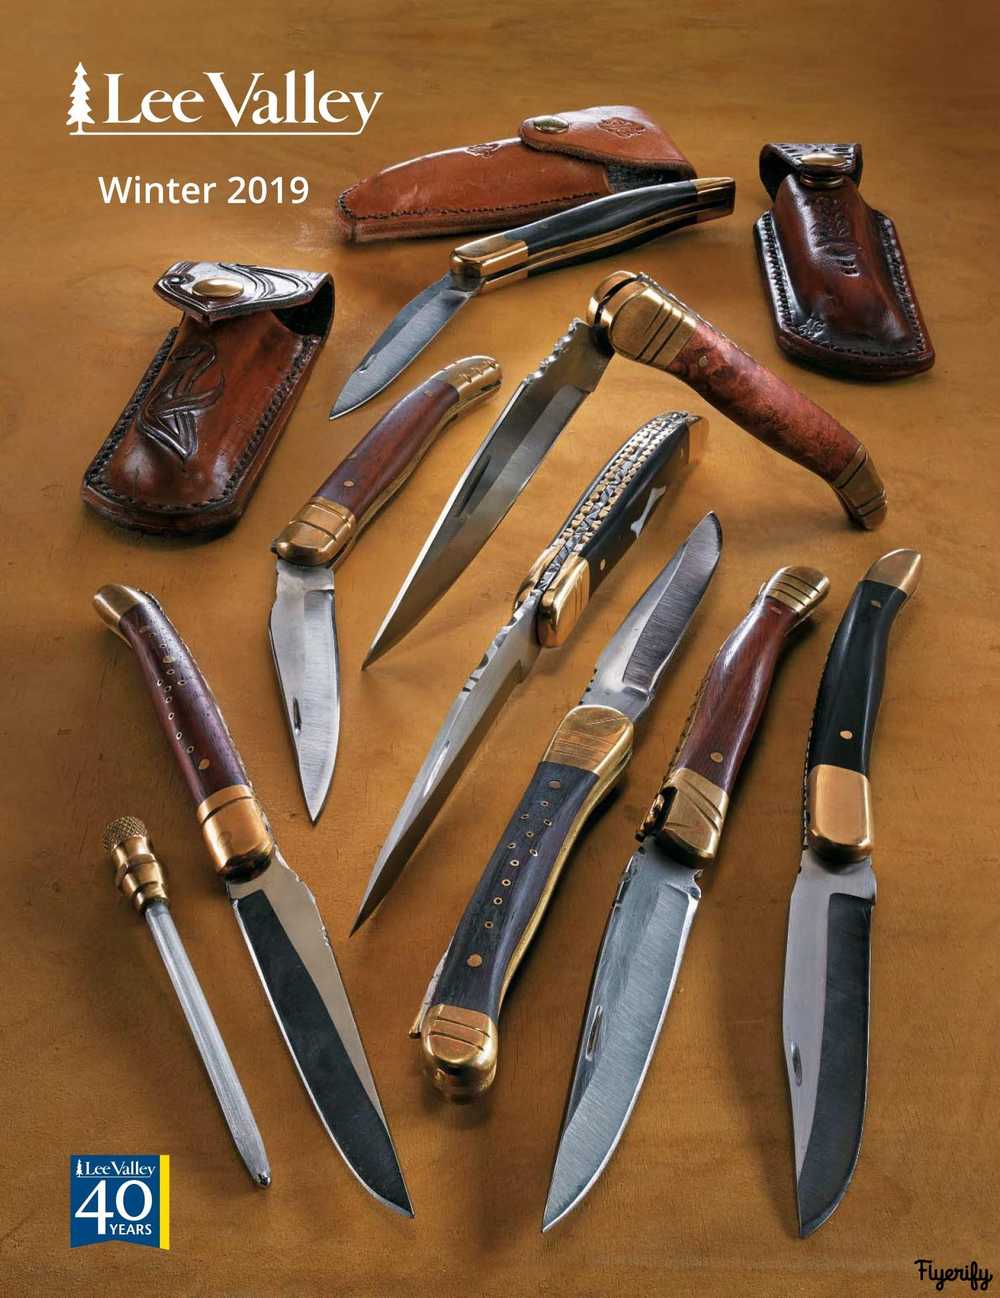 Lee Valley Winter Catalogue 2019 1 